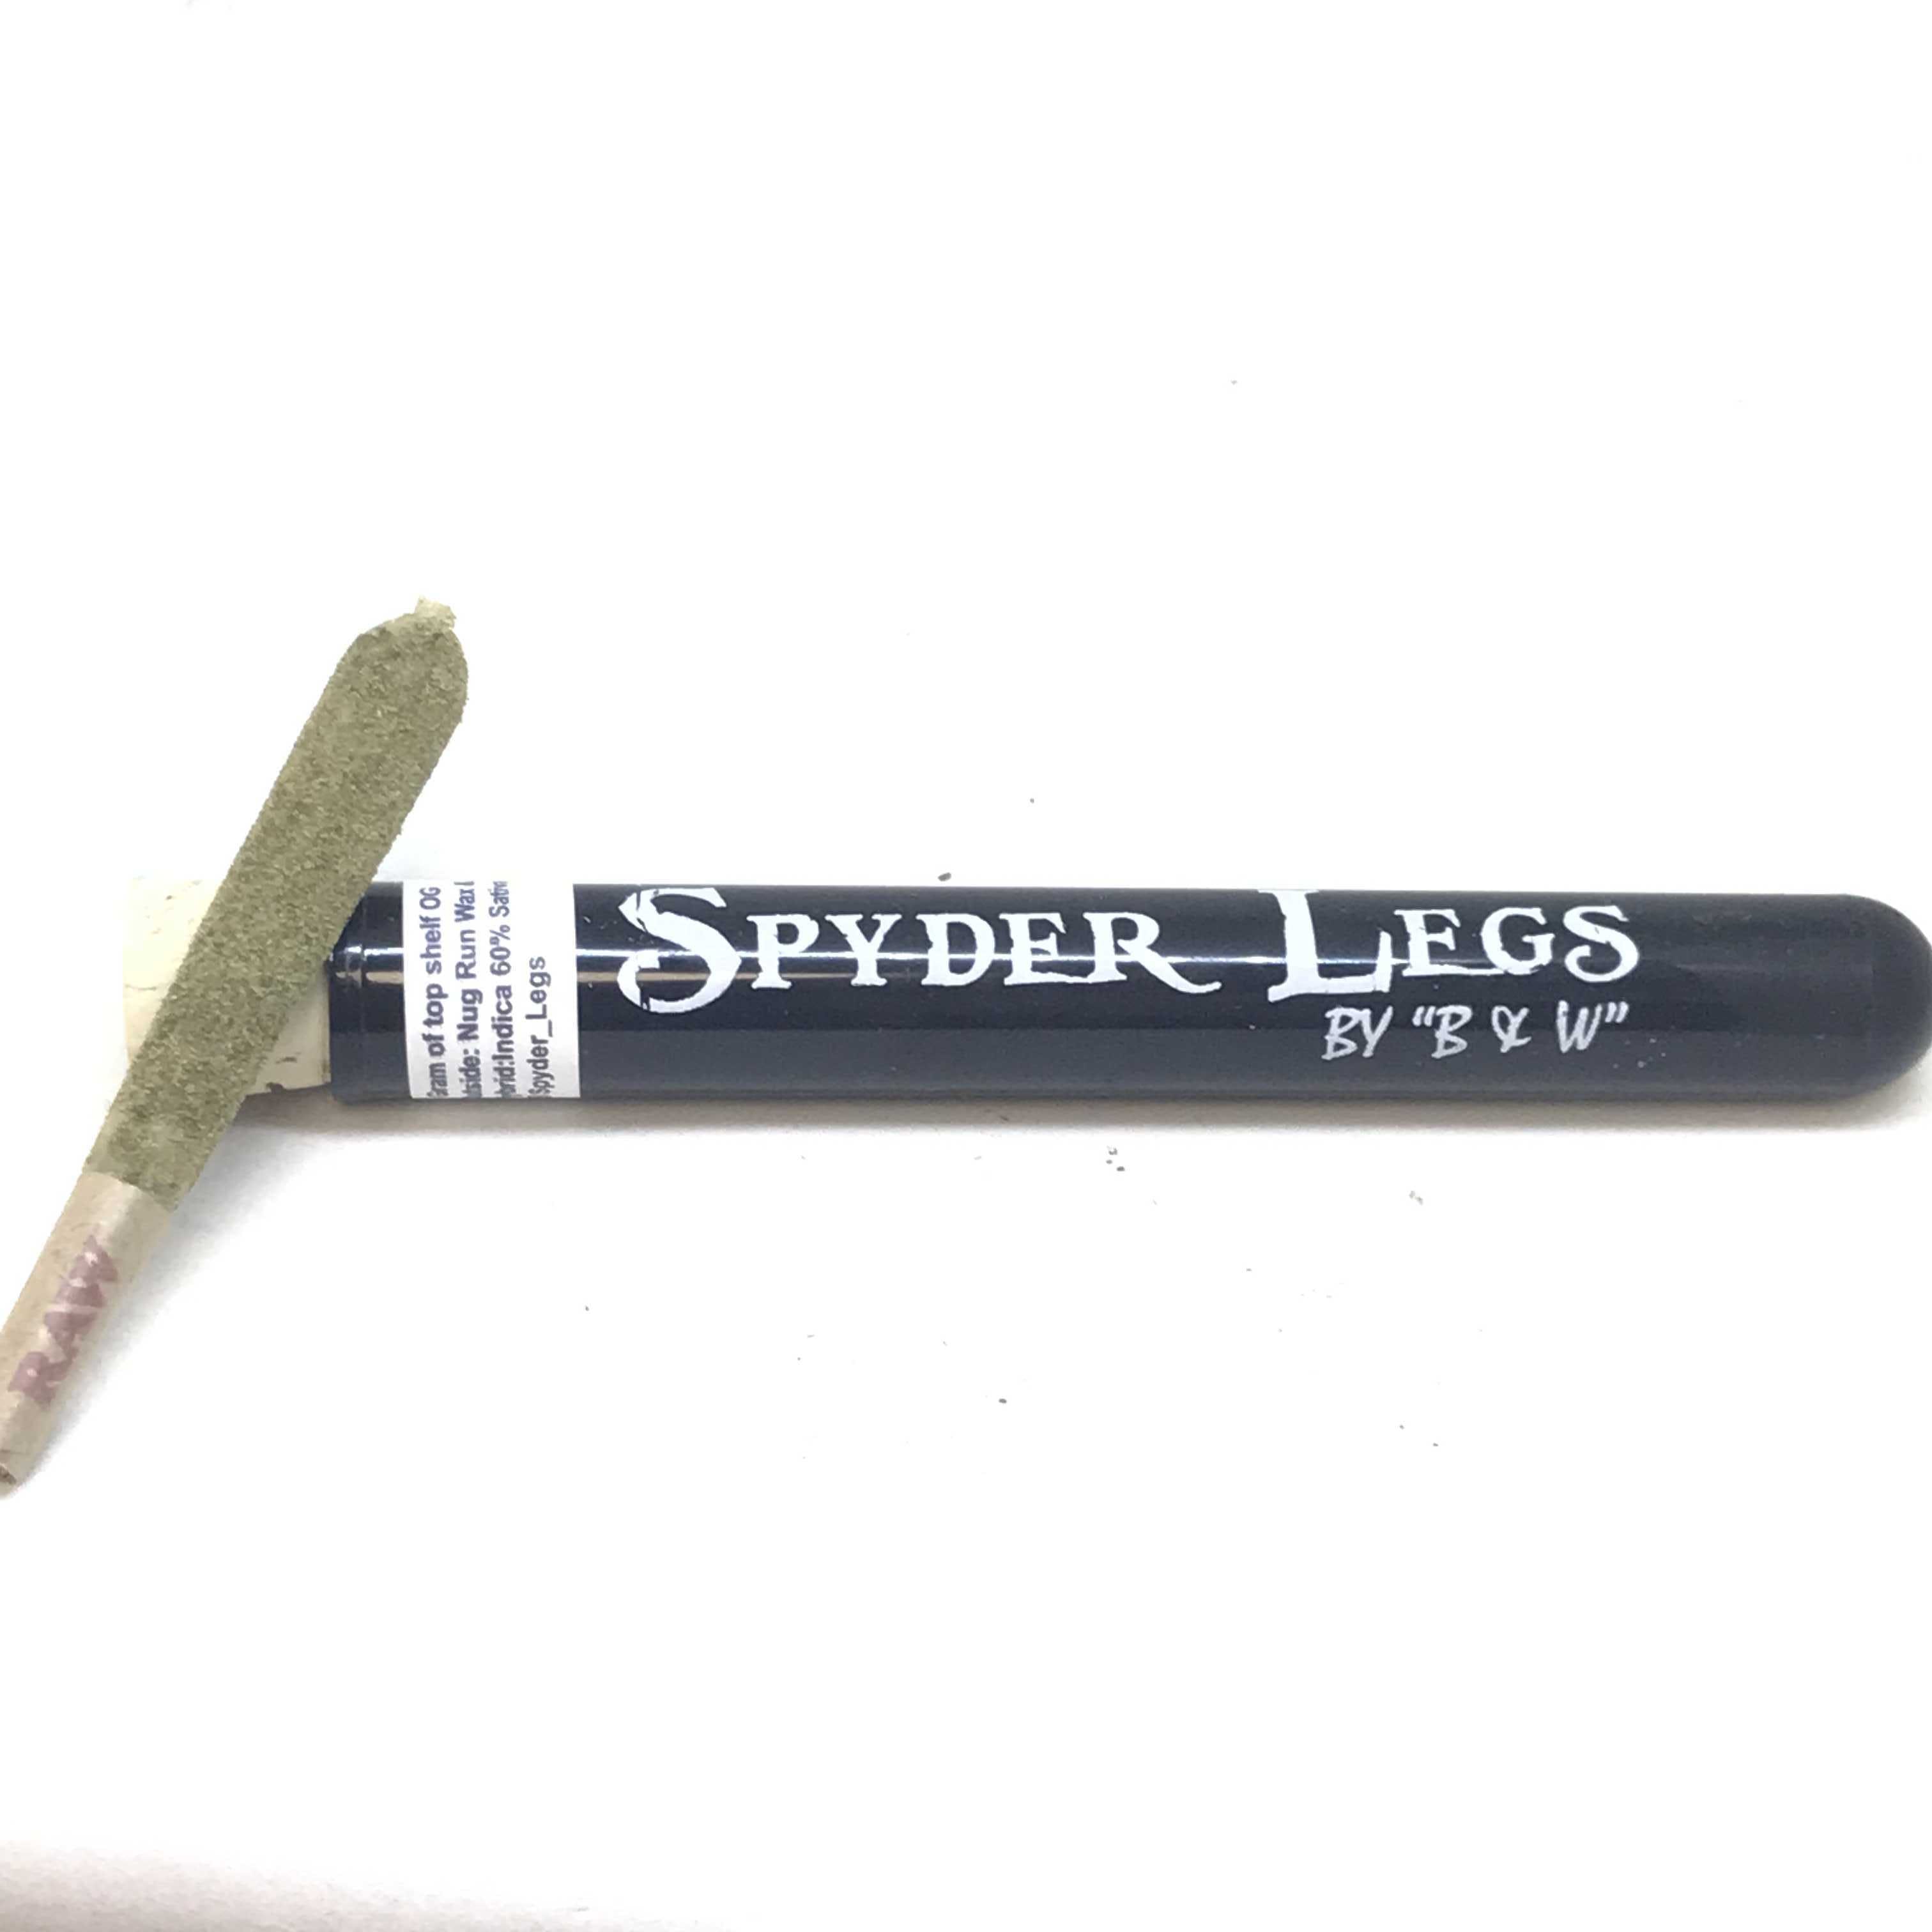 Spyder legs 1g Dipped Joint